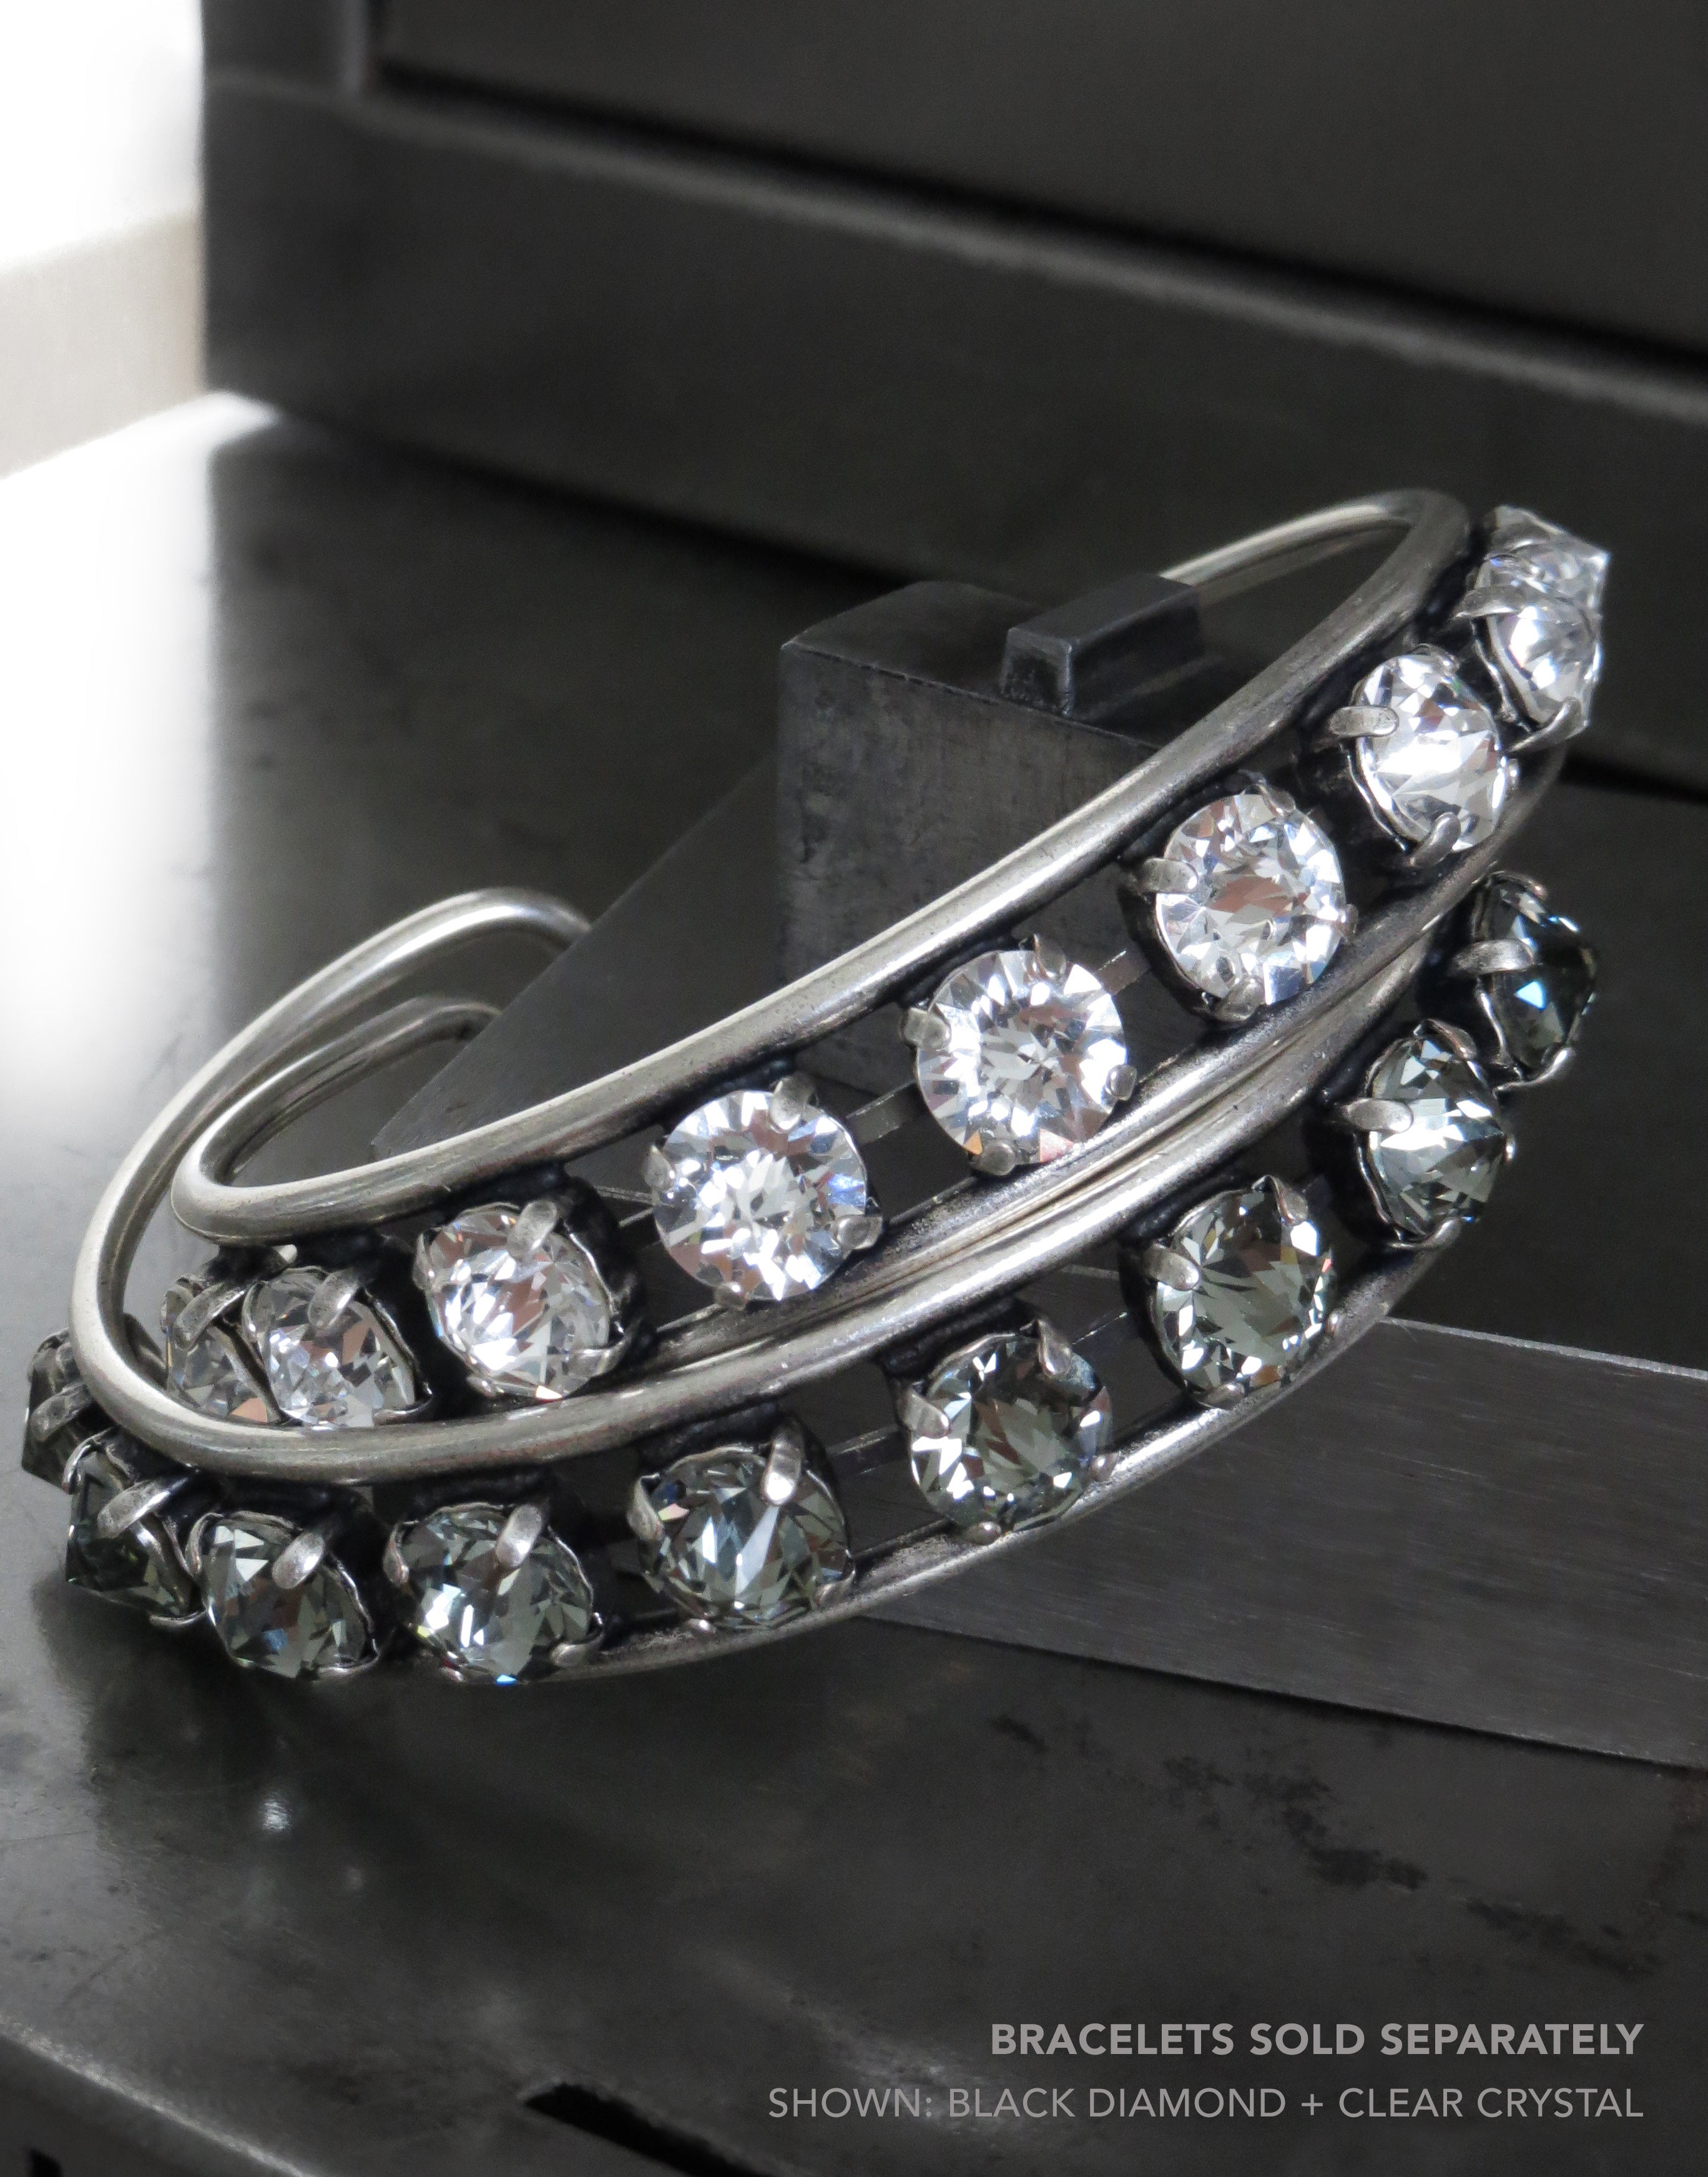 SPLIT PERSONALITY - Rhinestone Bangle Bracelet in Black Diamond or Clear Crystal